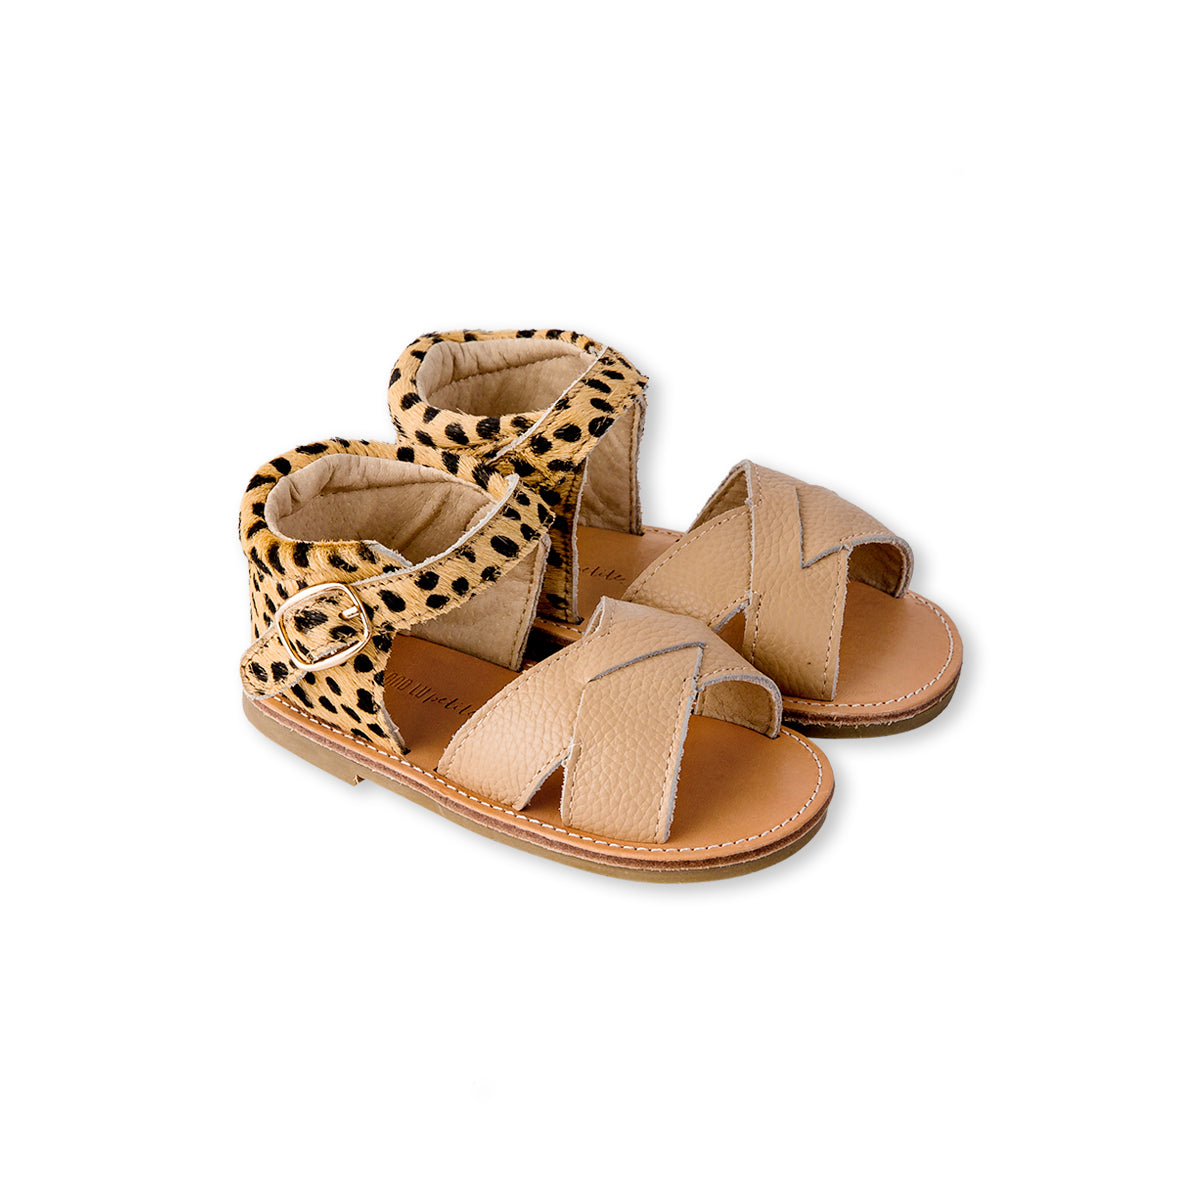 Crisscross Sandal - Nude & Leopard Print